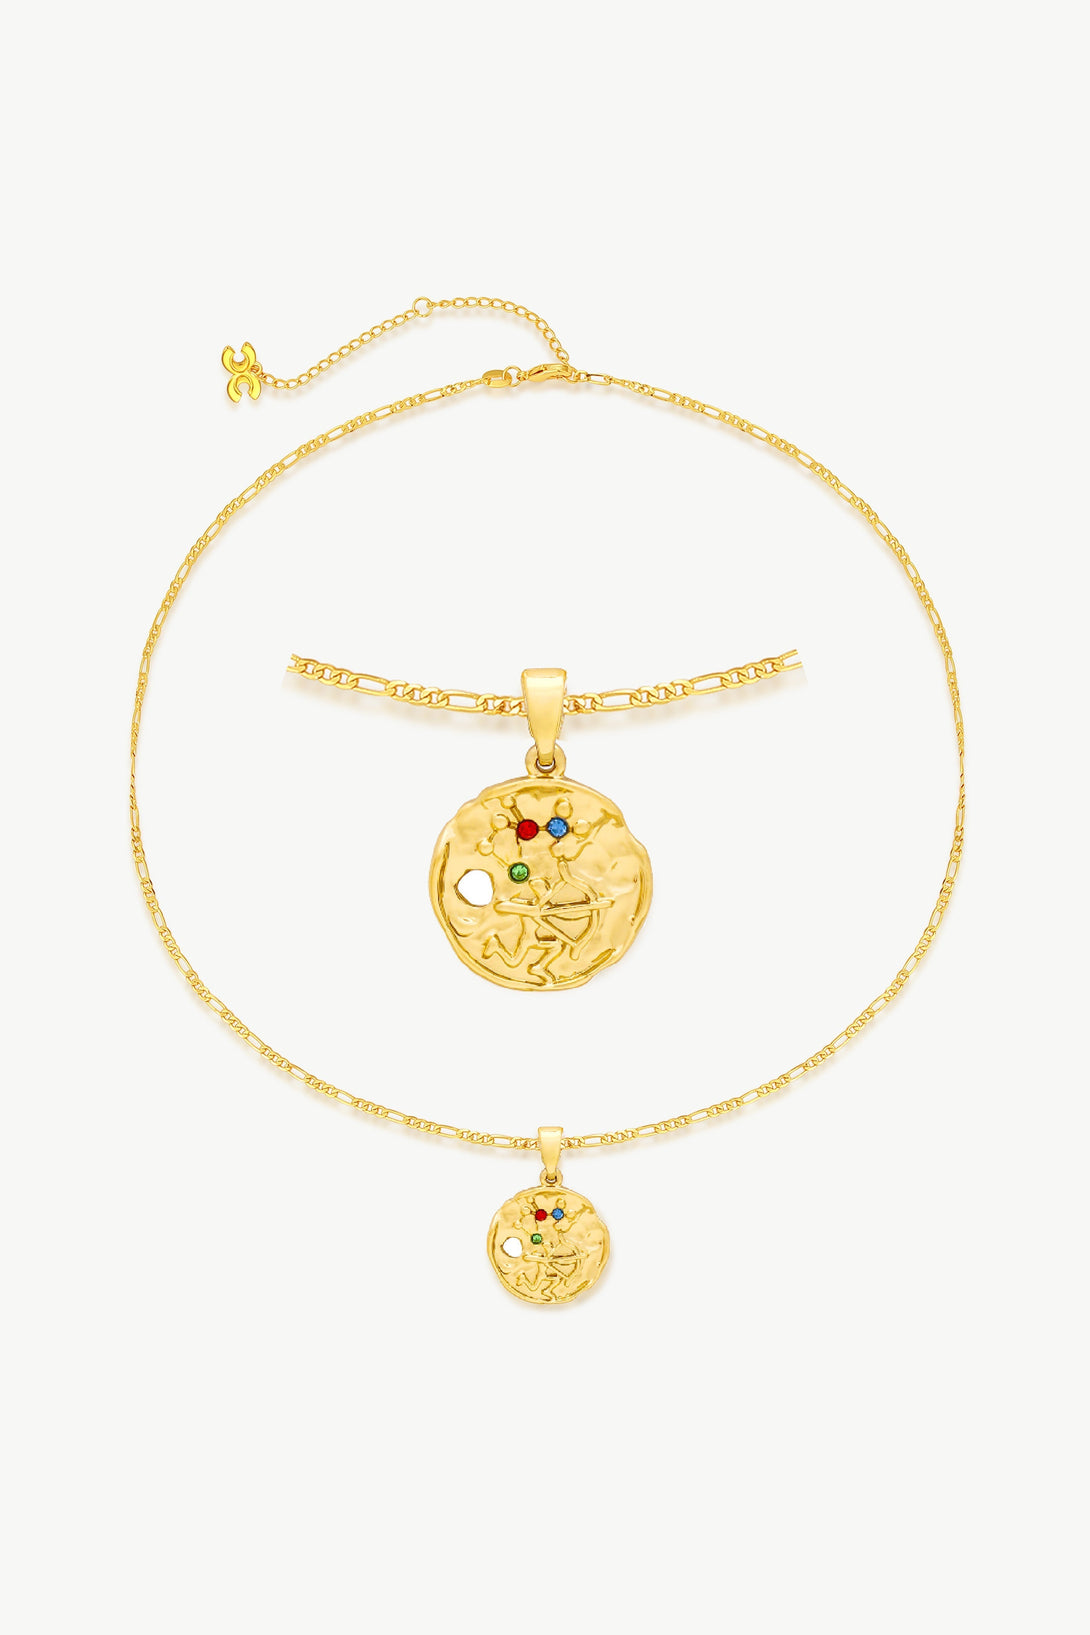 Gold Sculptural Zodiac Sign Pendant Necklace Set-Sagittarius - Classicharms